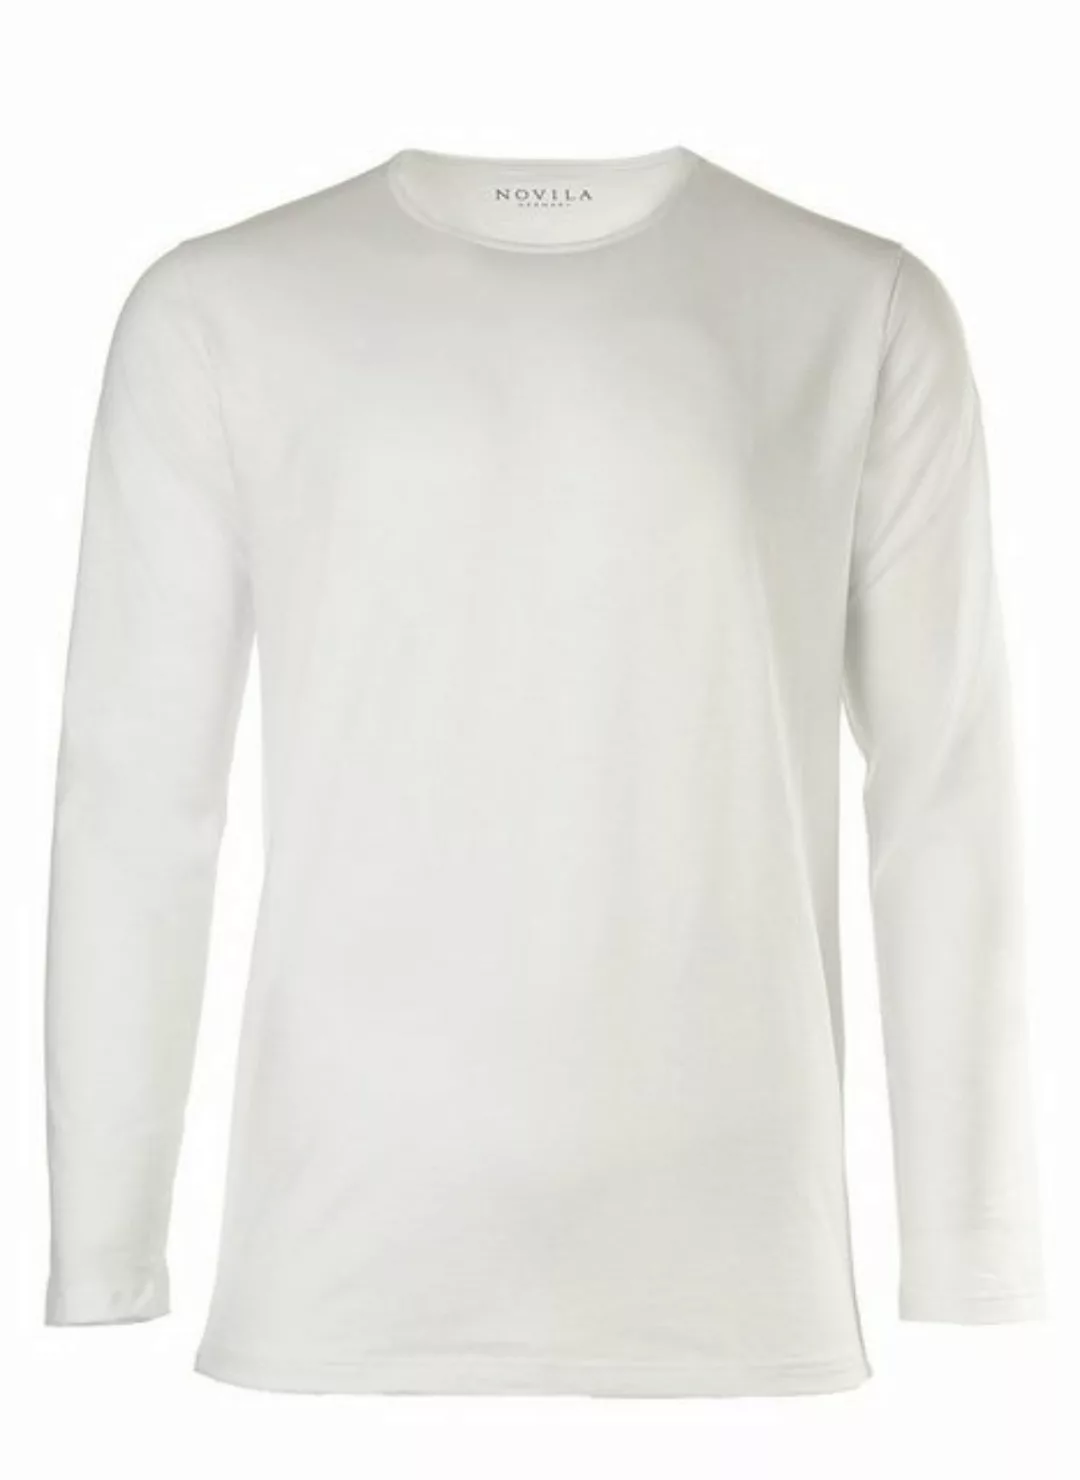 Novila T-Shirt 1/1 9579/496/1 günstig online kaufen